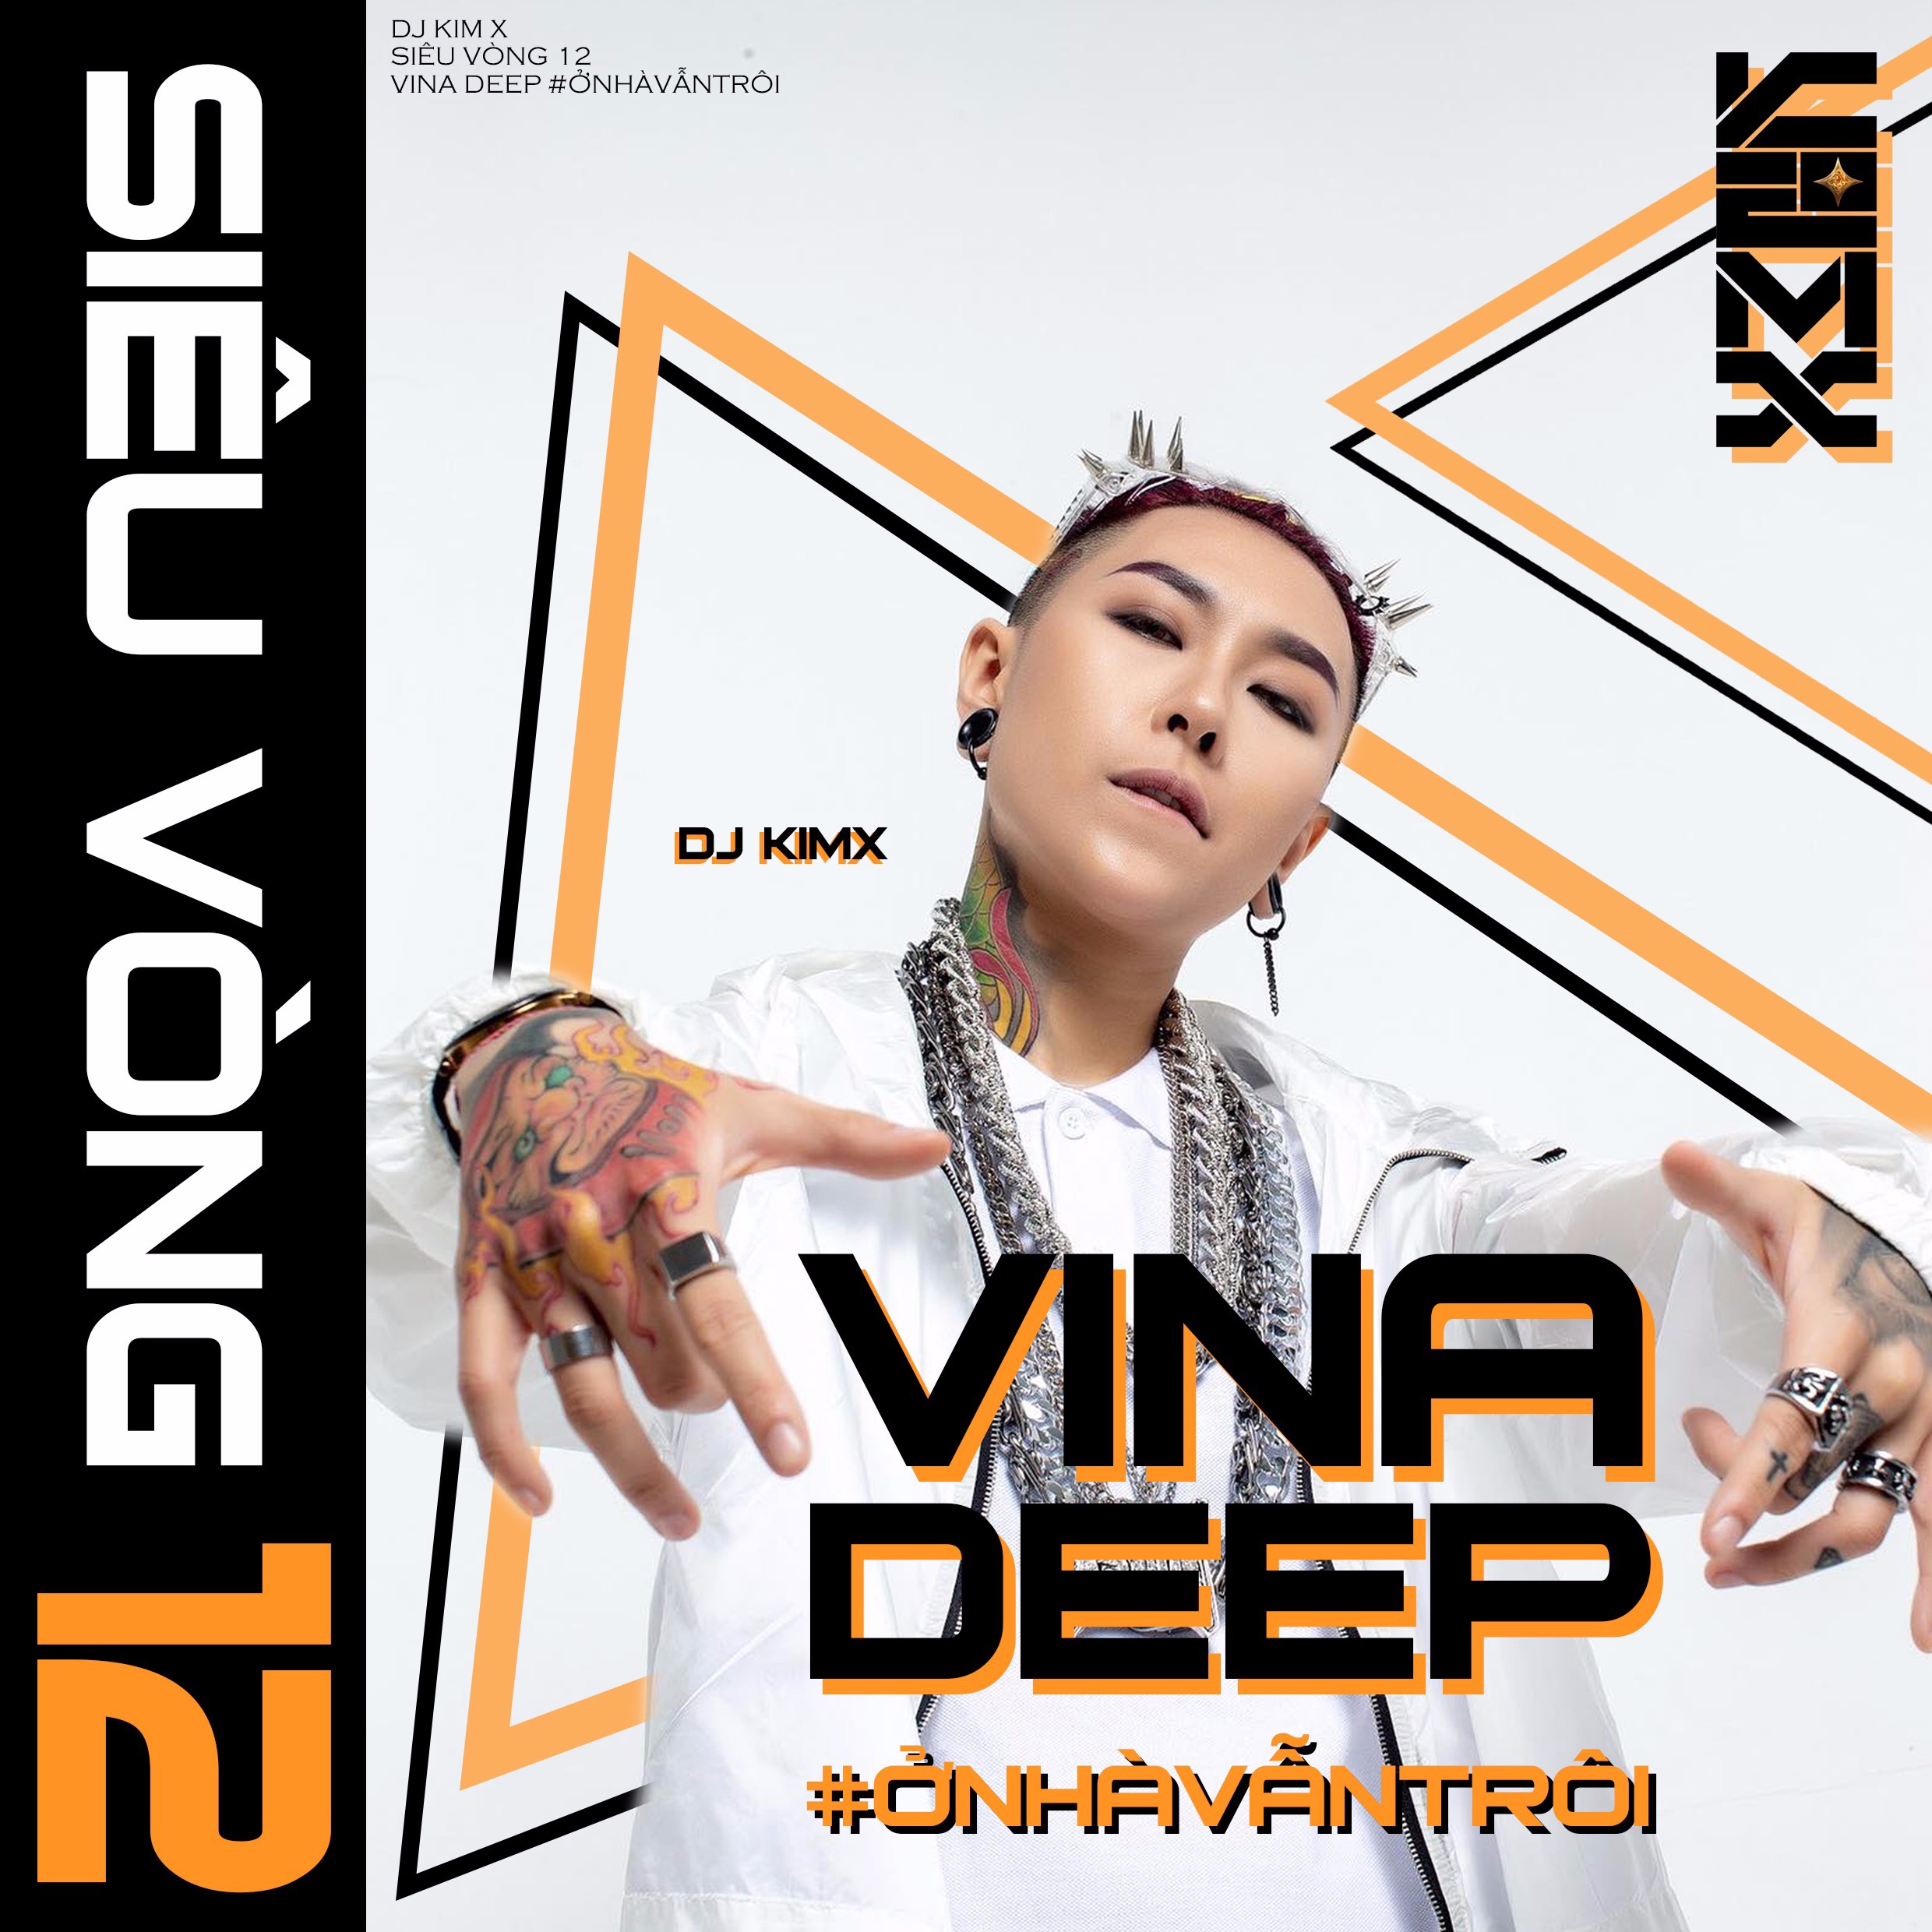 Преузимање #ỞNHÀVẪNTRÔI --- DJ KIMX --- MIXSET KIMX SIÊU VÒNG 12 --- VINADEEP